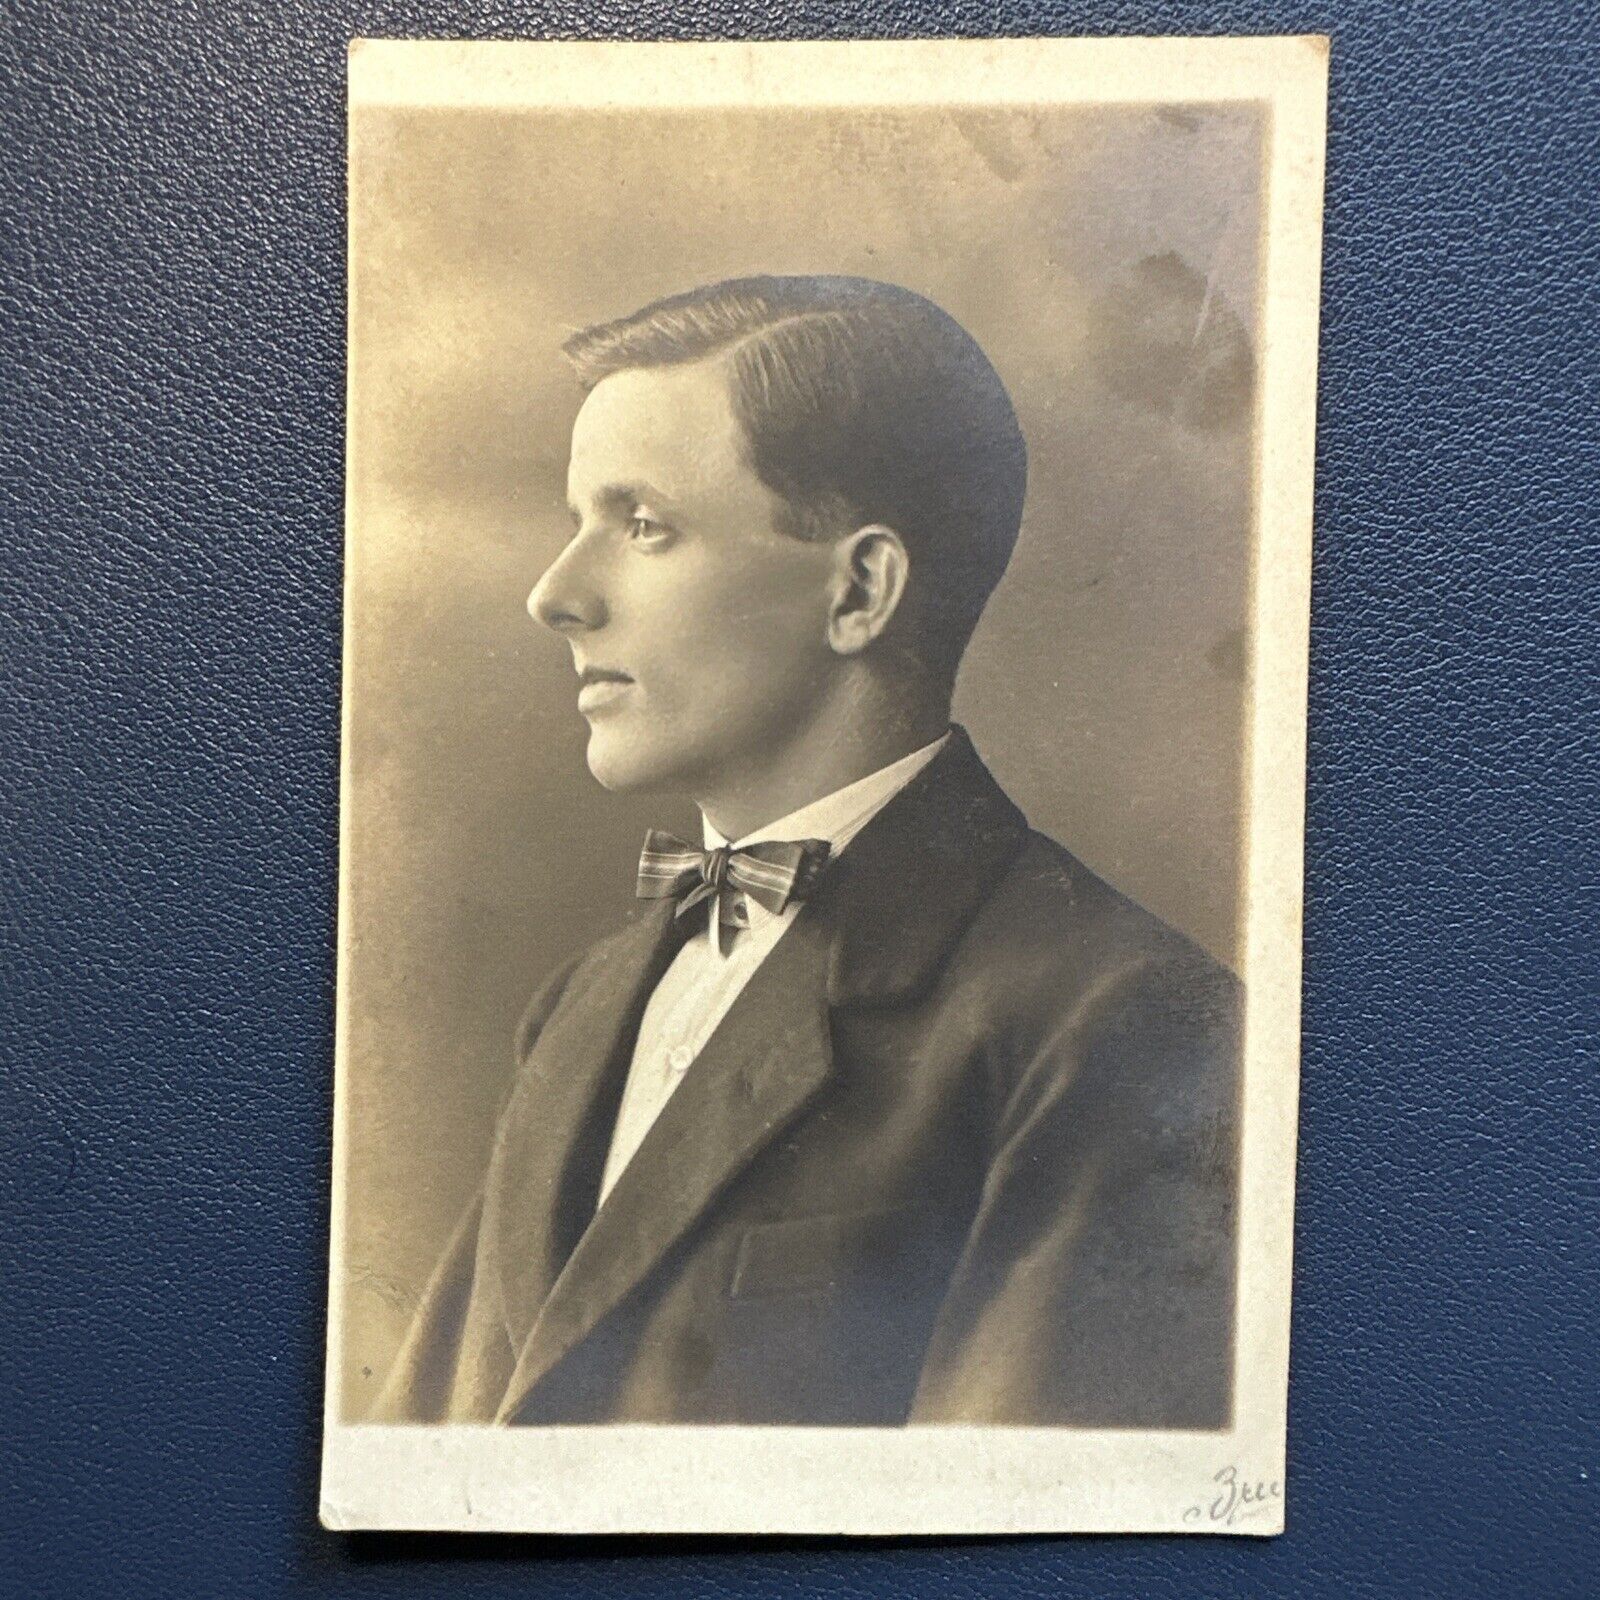 VINTAGE PHOTO Profile Of Elegant Man In Bowtie, Original Snapshot